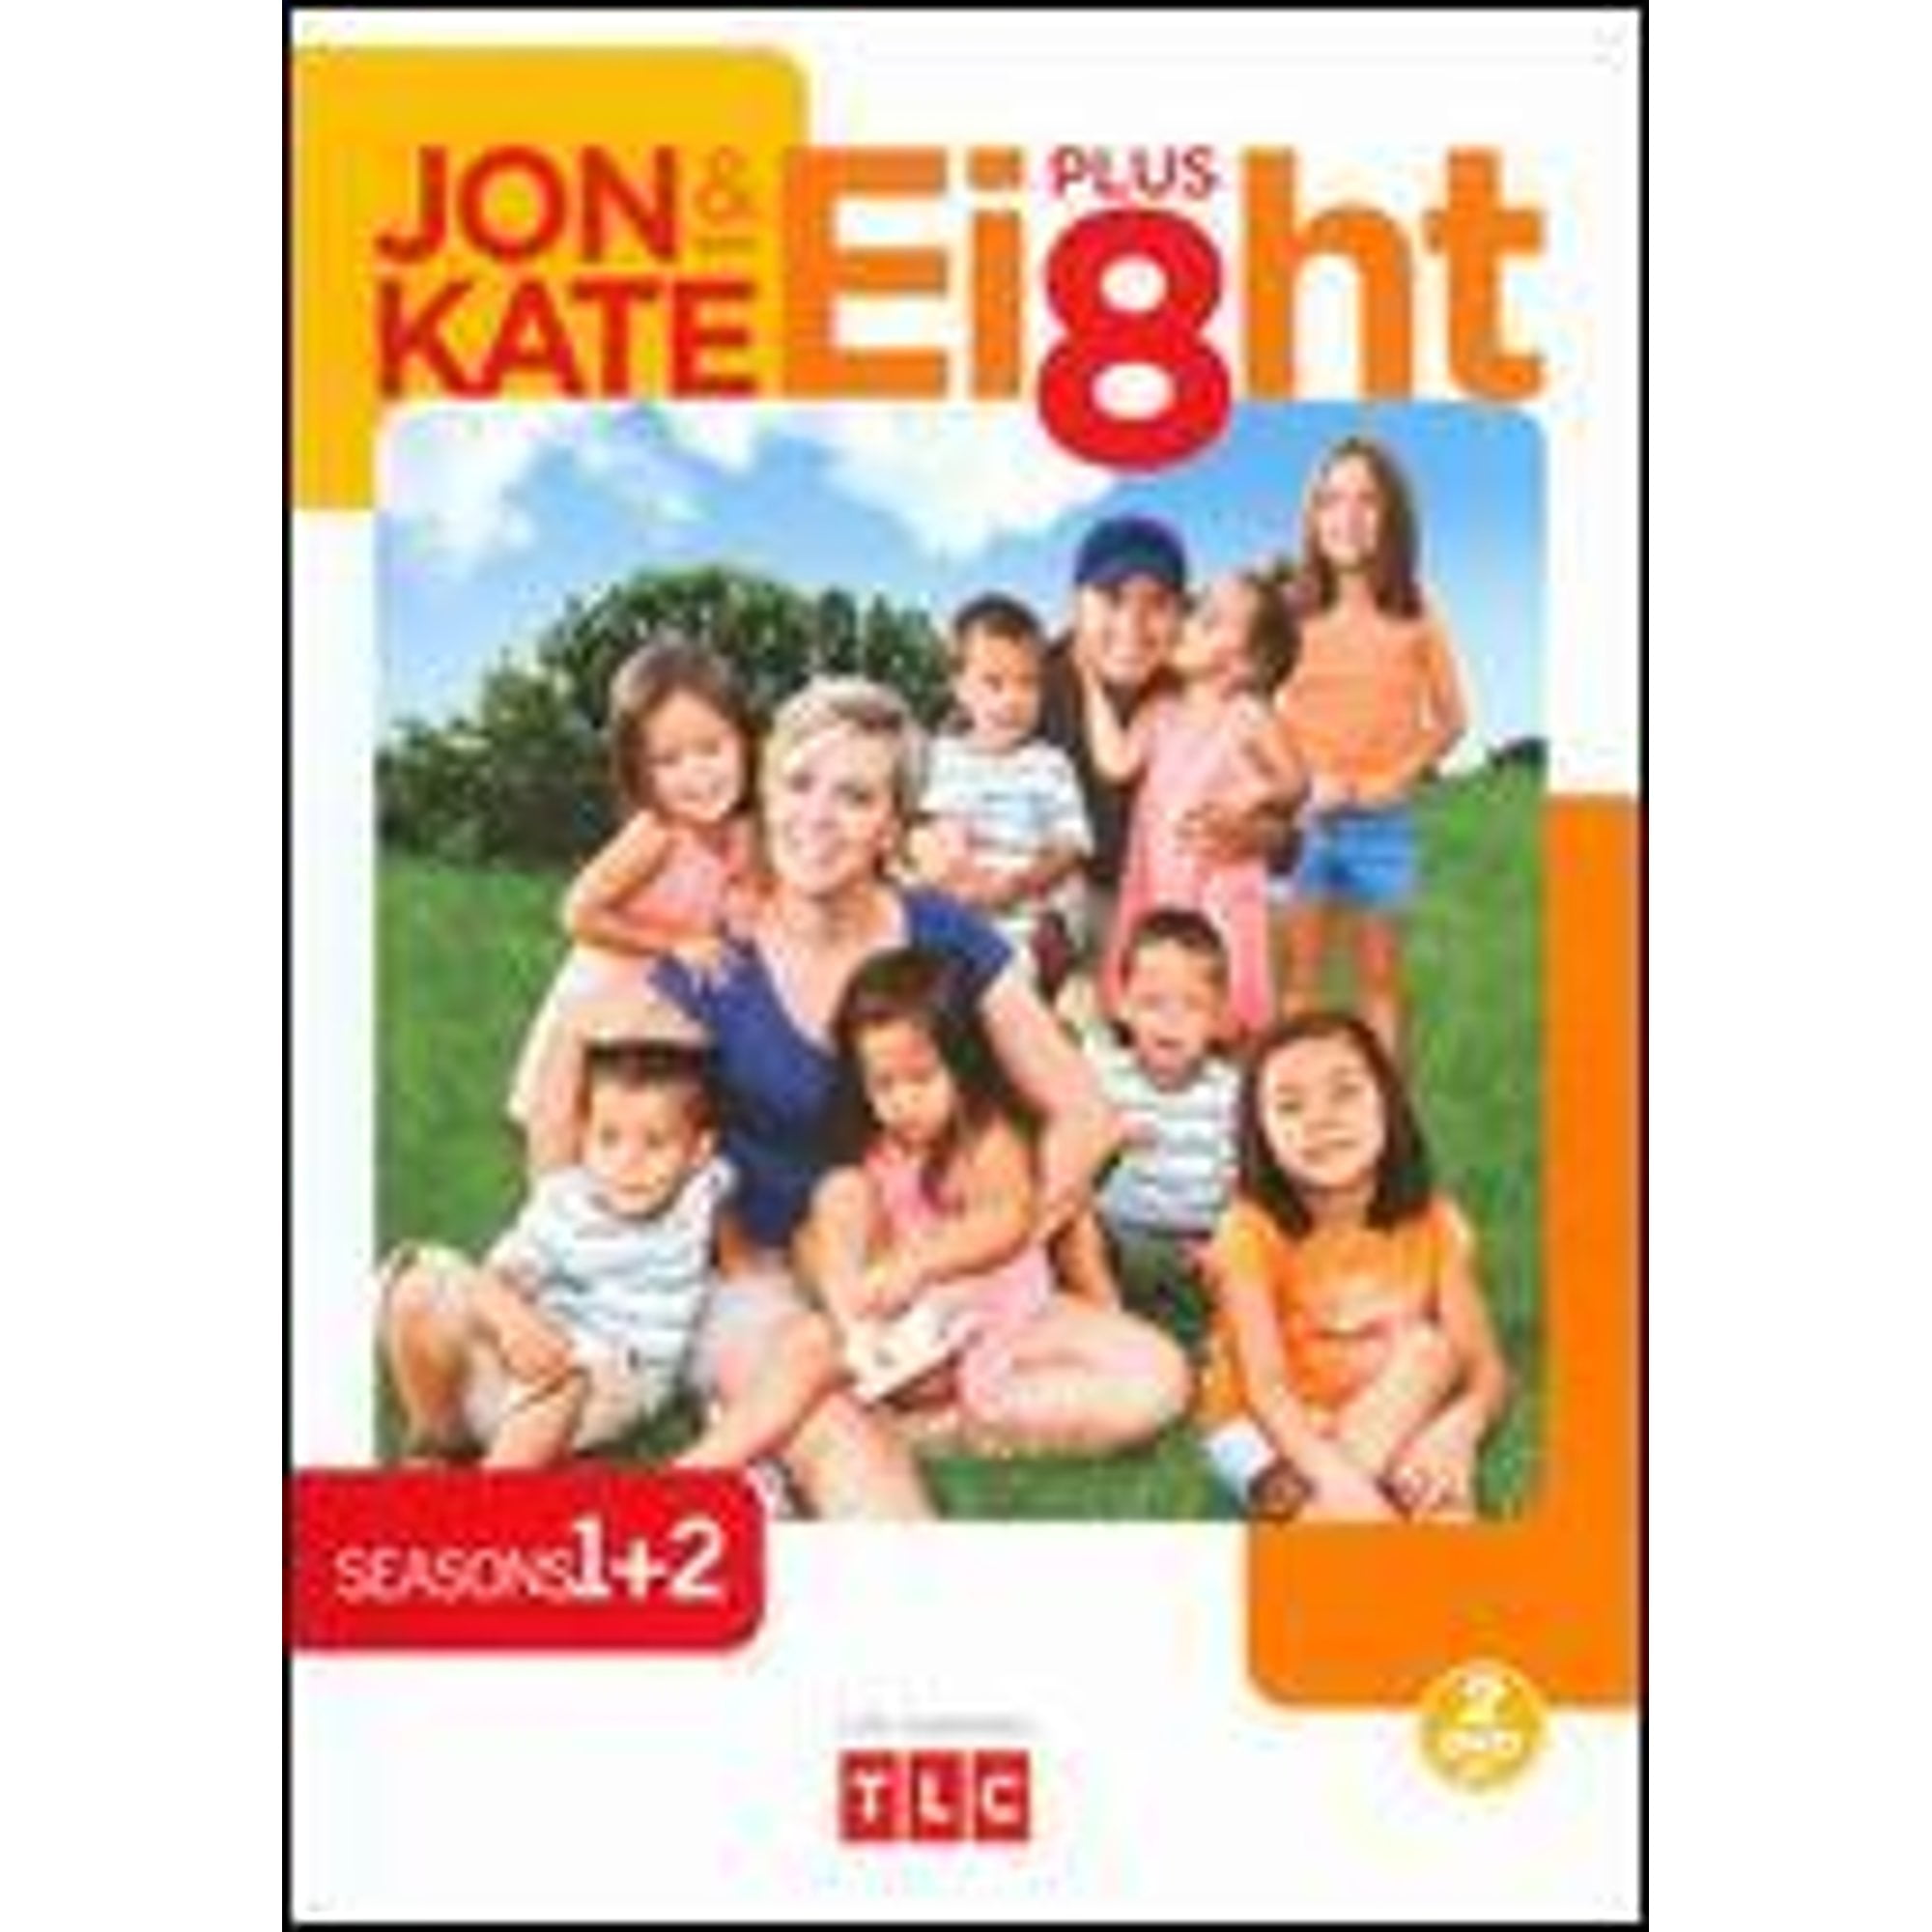 Jon & Kate Plus Ei8ht: Jon & Kate Plus Eight : Seasons 1 & 2 (DVD video ...